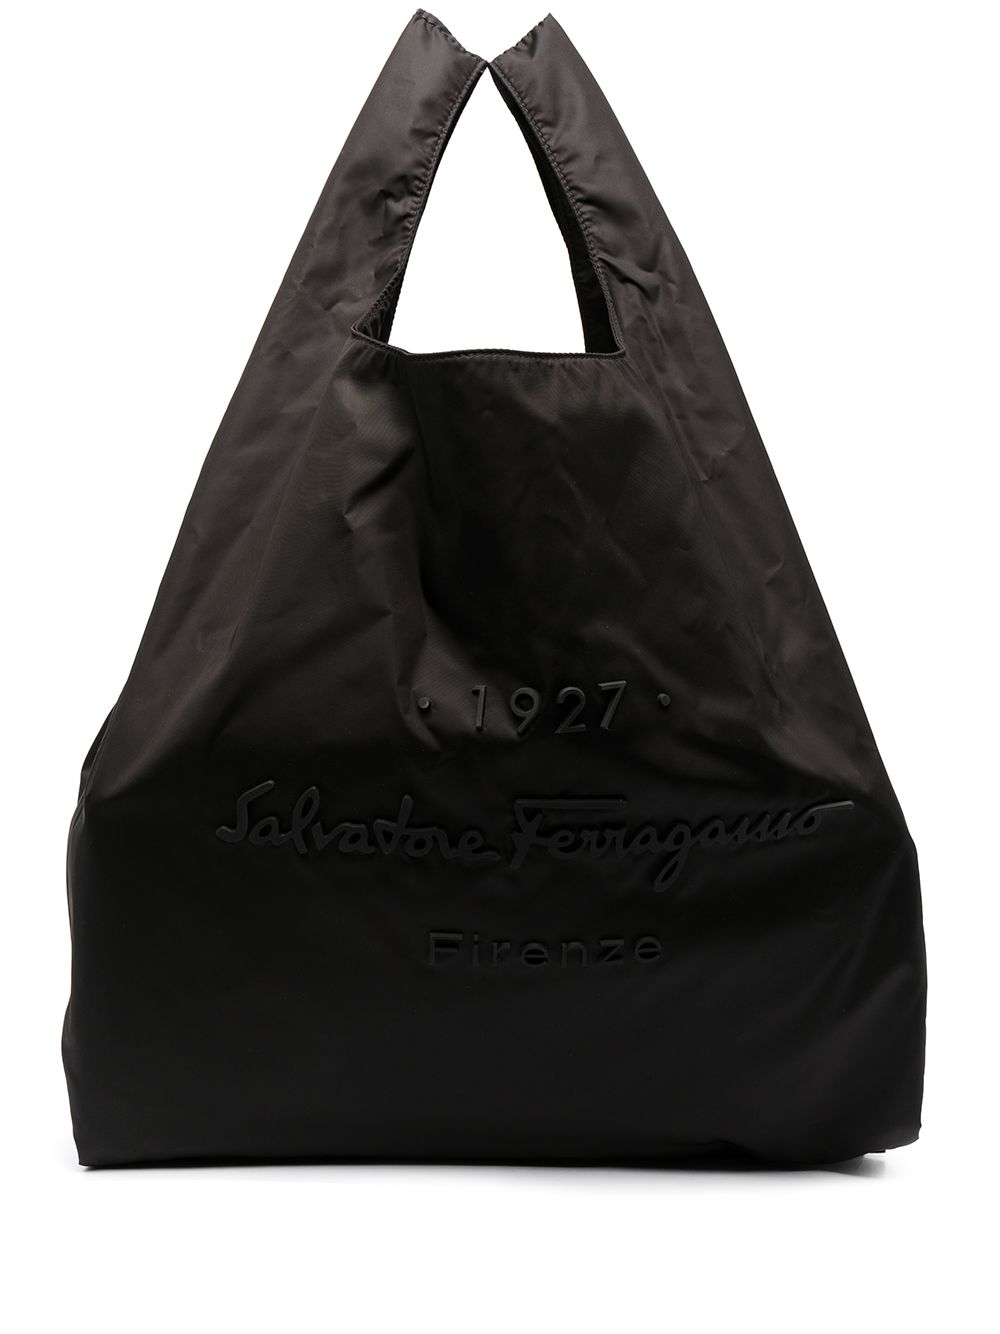 фото Salvatore ferragamo сумка-тоут с тисненым логотипом